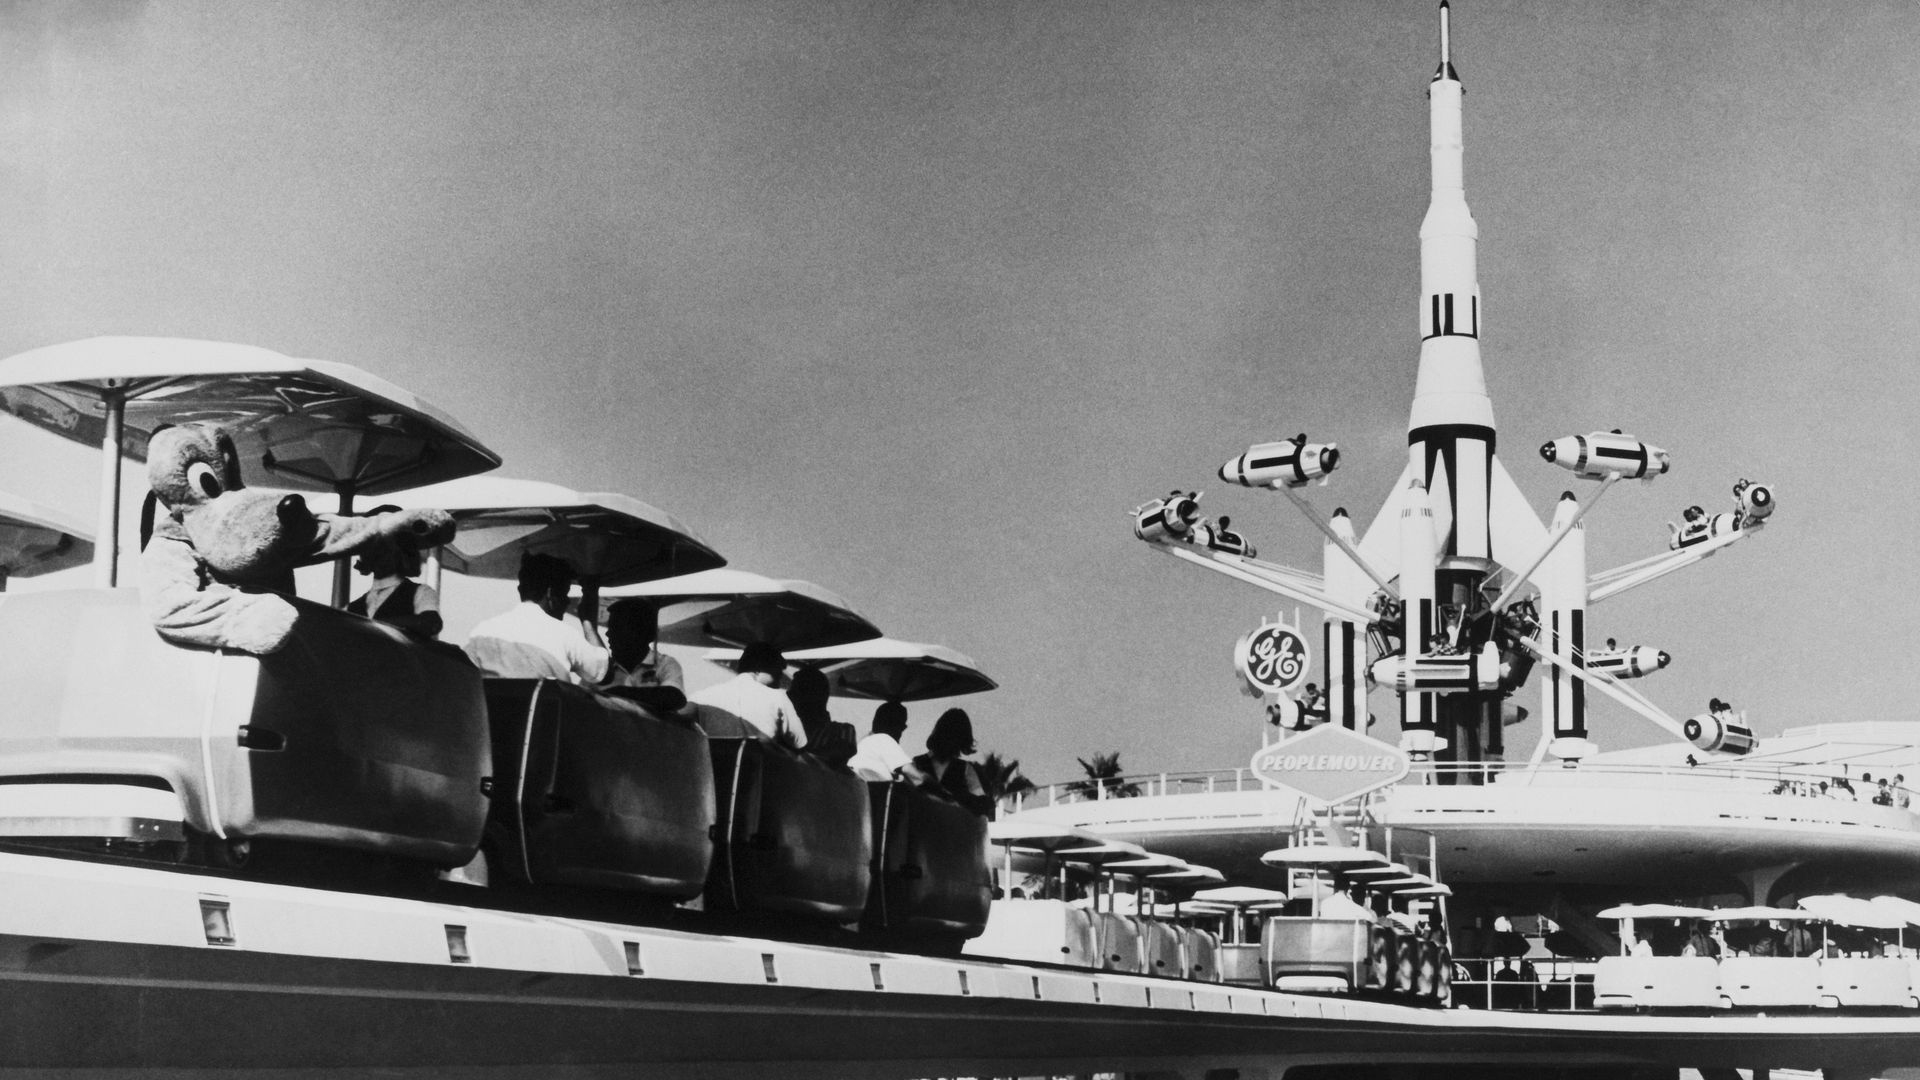 An archival photo of Disneyland's Tomorrowland theme park